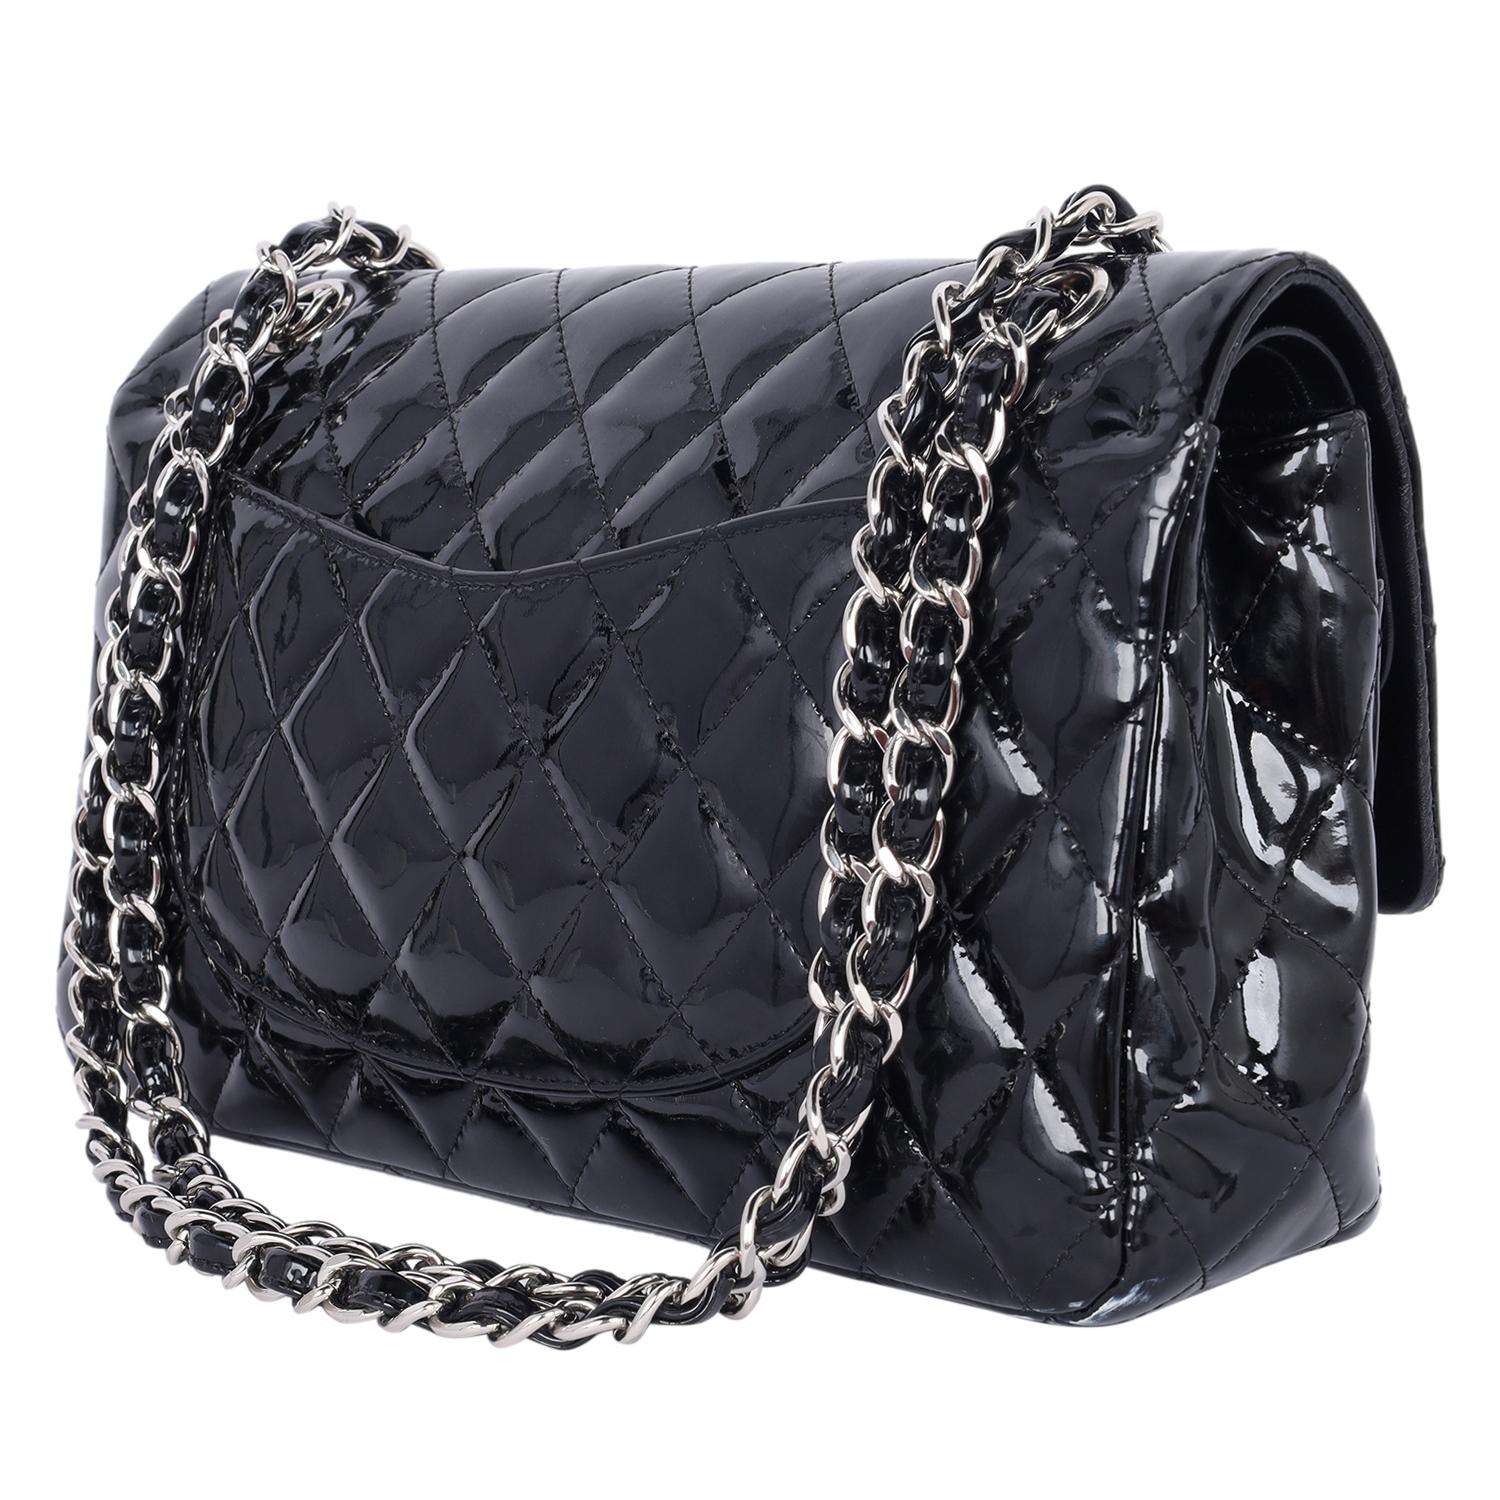 Chanel Double Flap Patent Leather Shoulder Bag Black For Sale 2